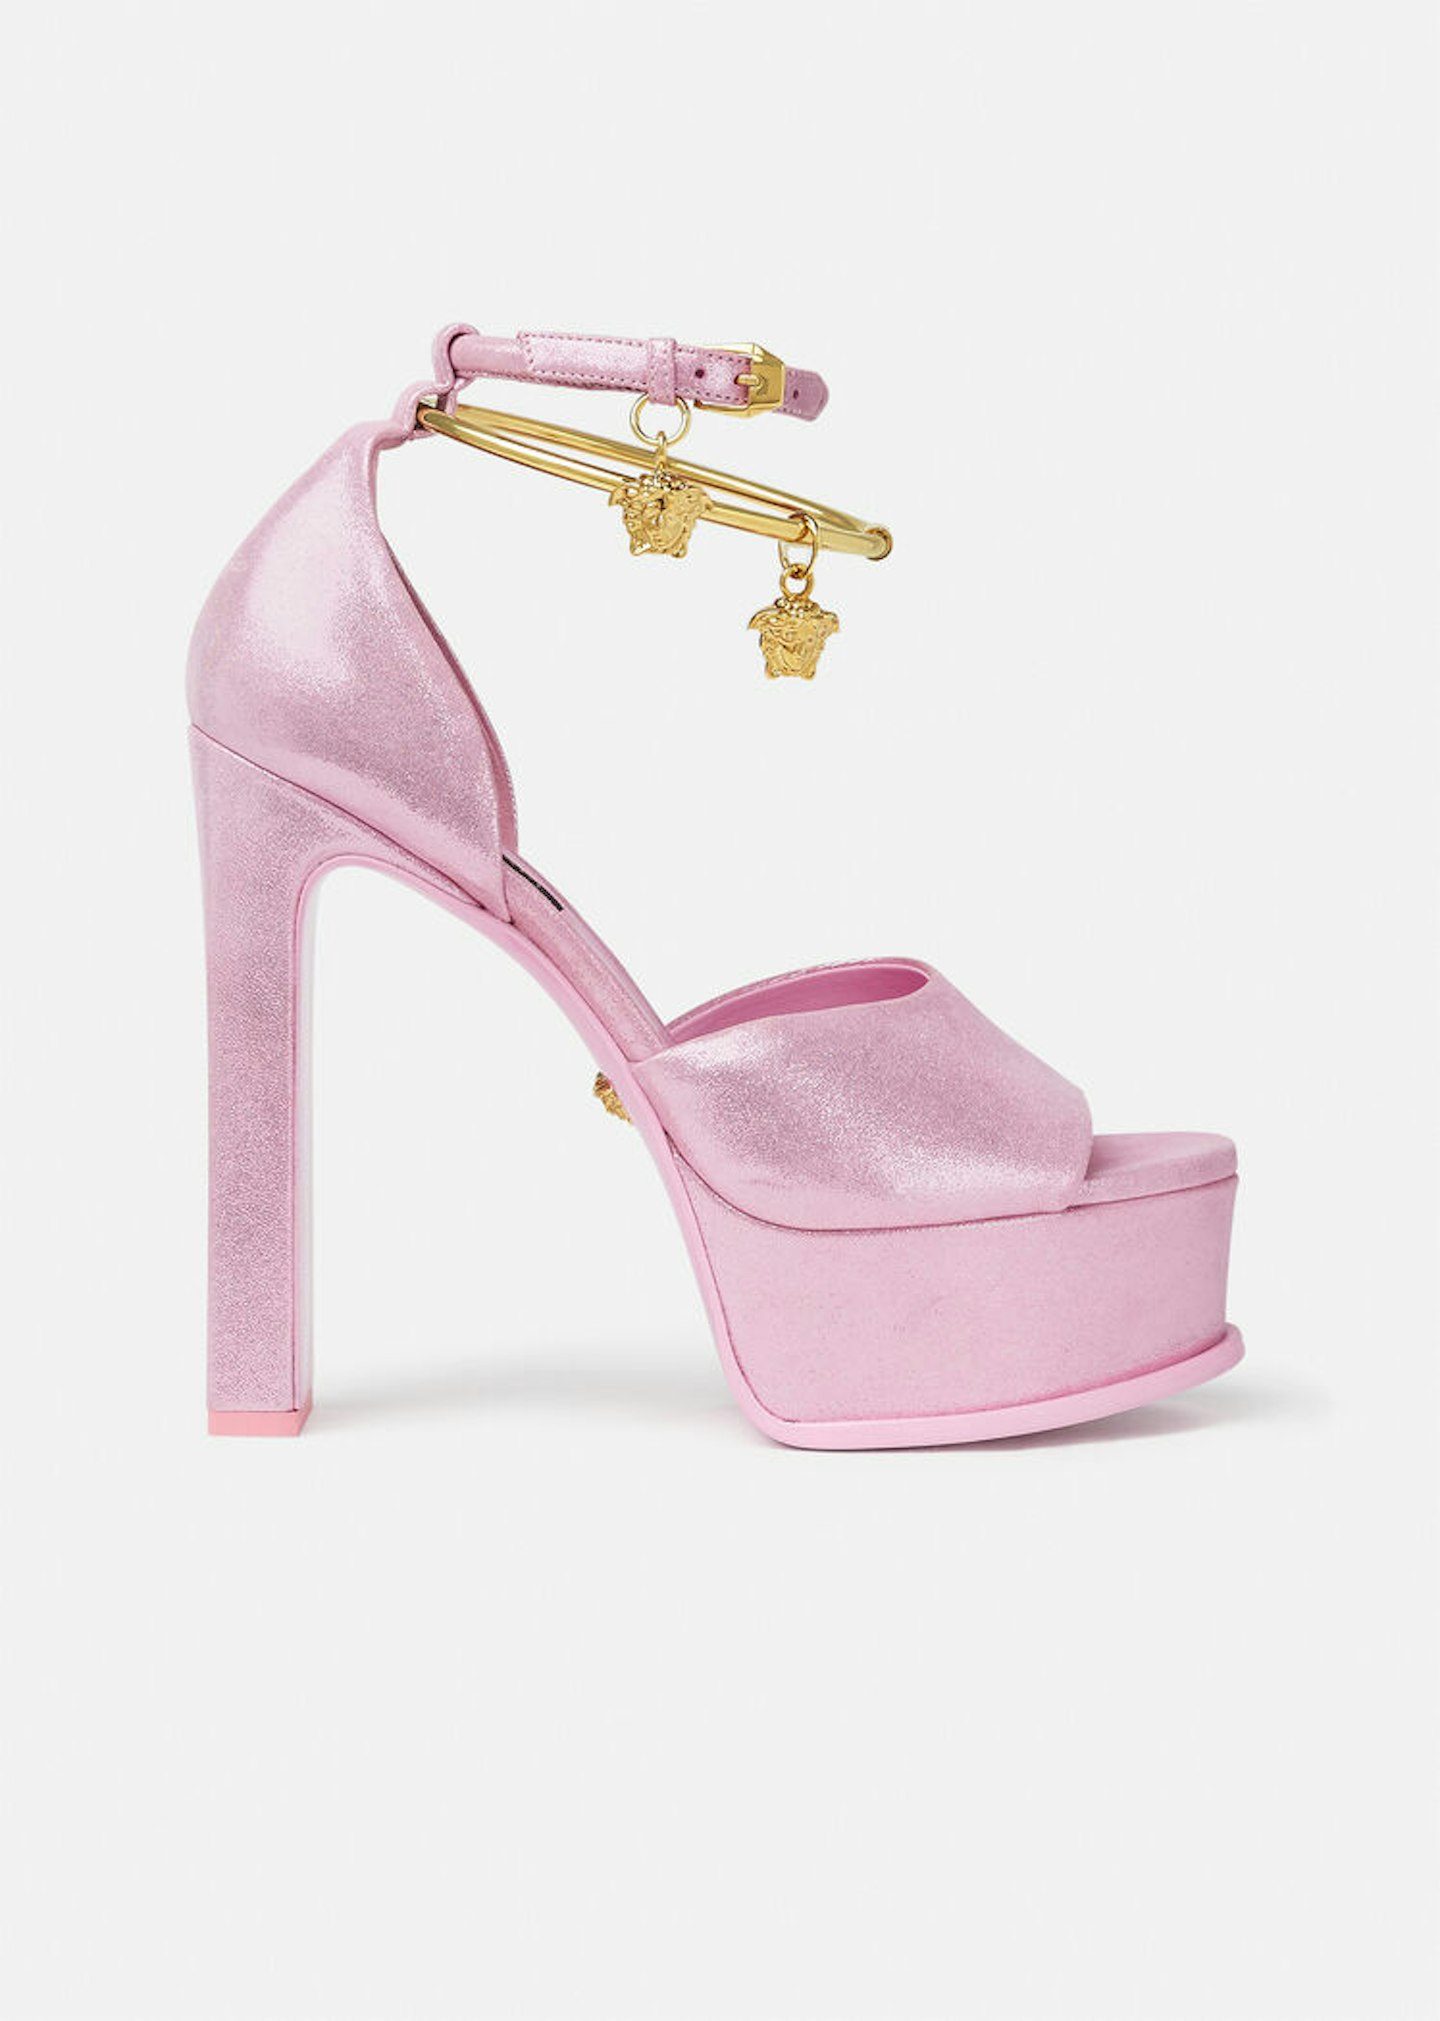 Versace, Suede Platform Sandals, £890